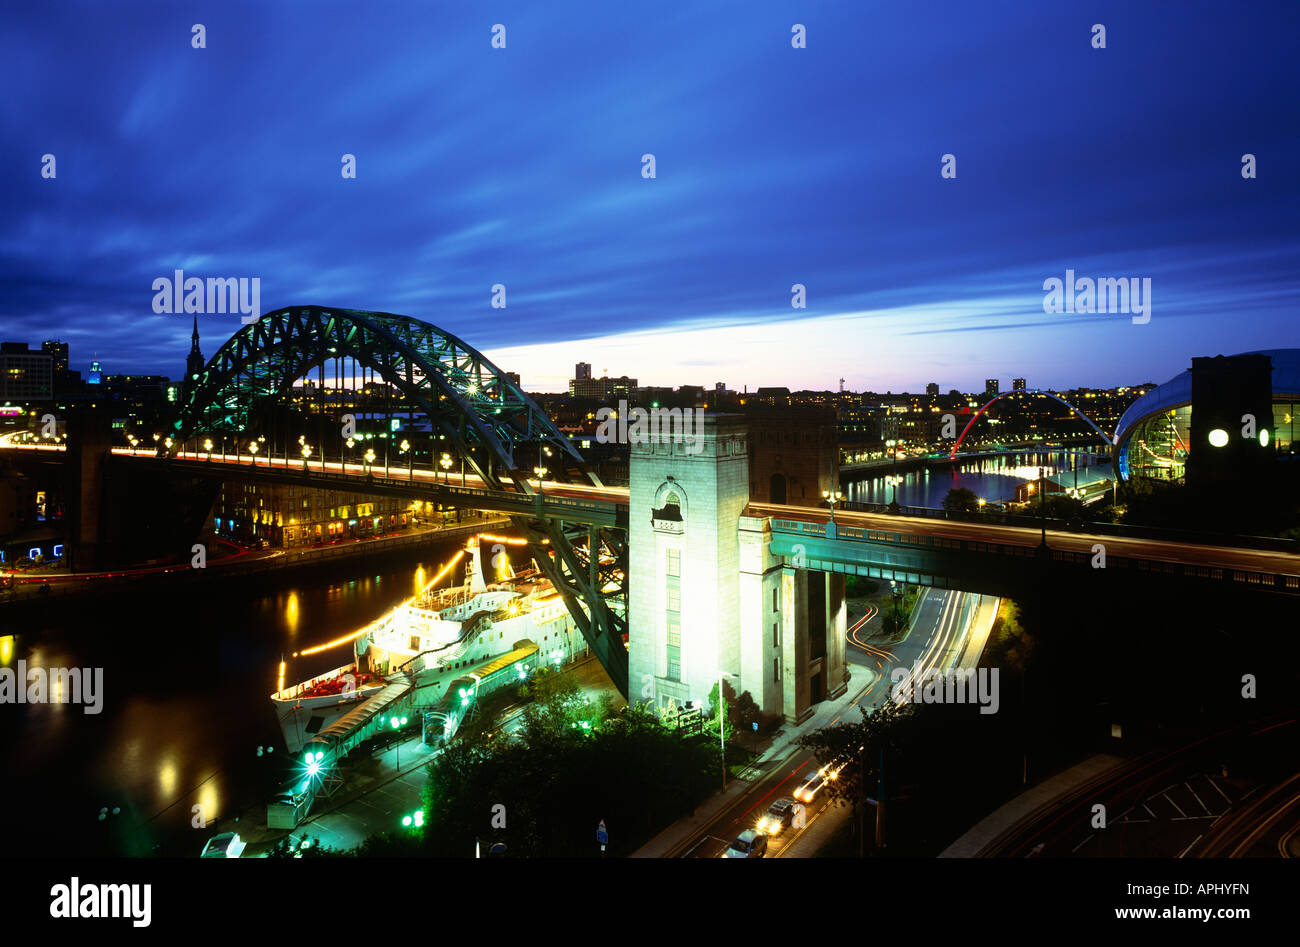 Tyne Bridge come visto dall'Hilton Hotel di Newcastle Gateshead, Tyne and Wear Foto Stock